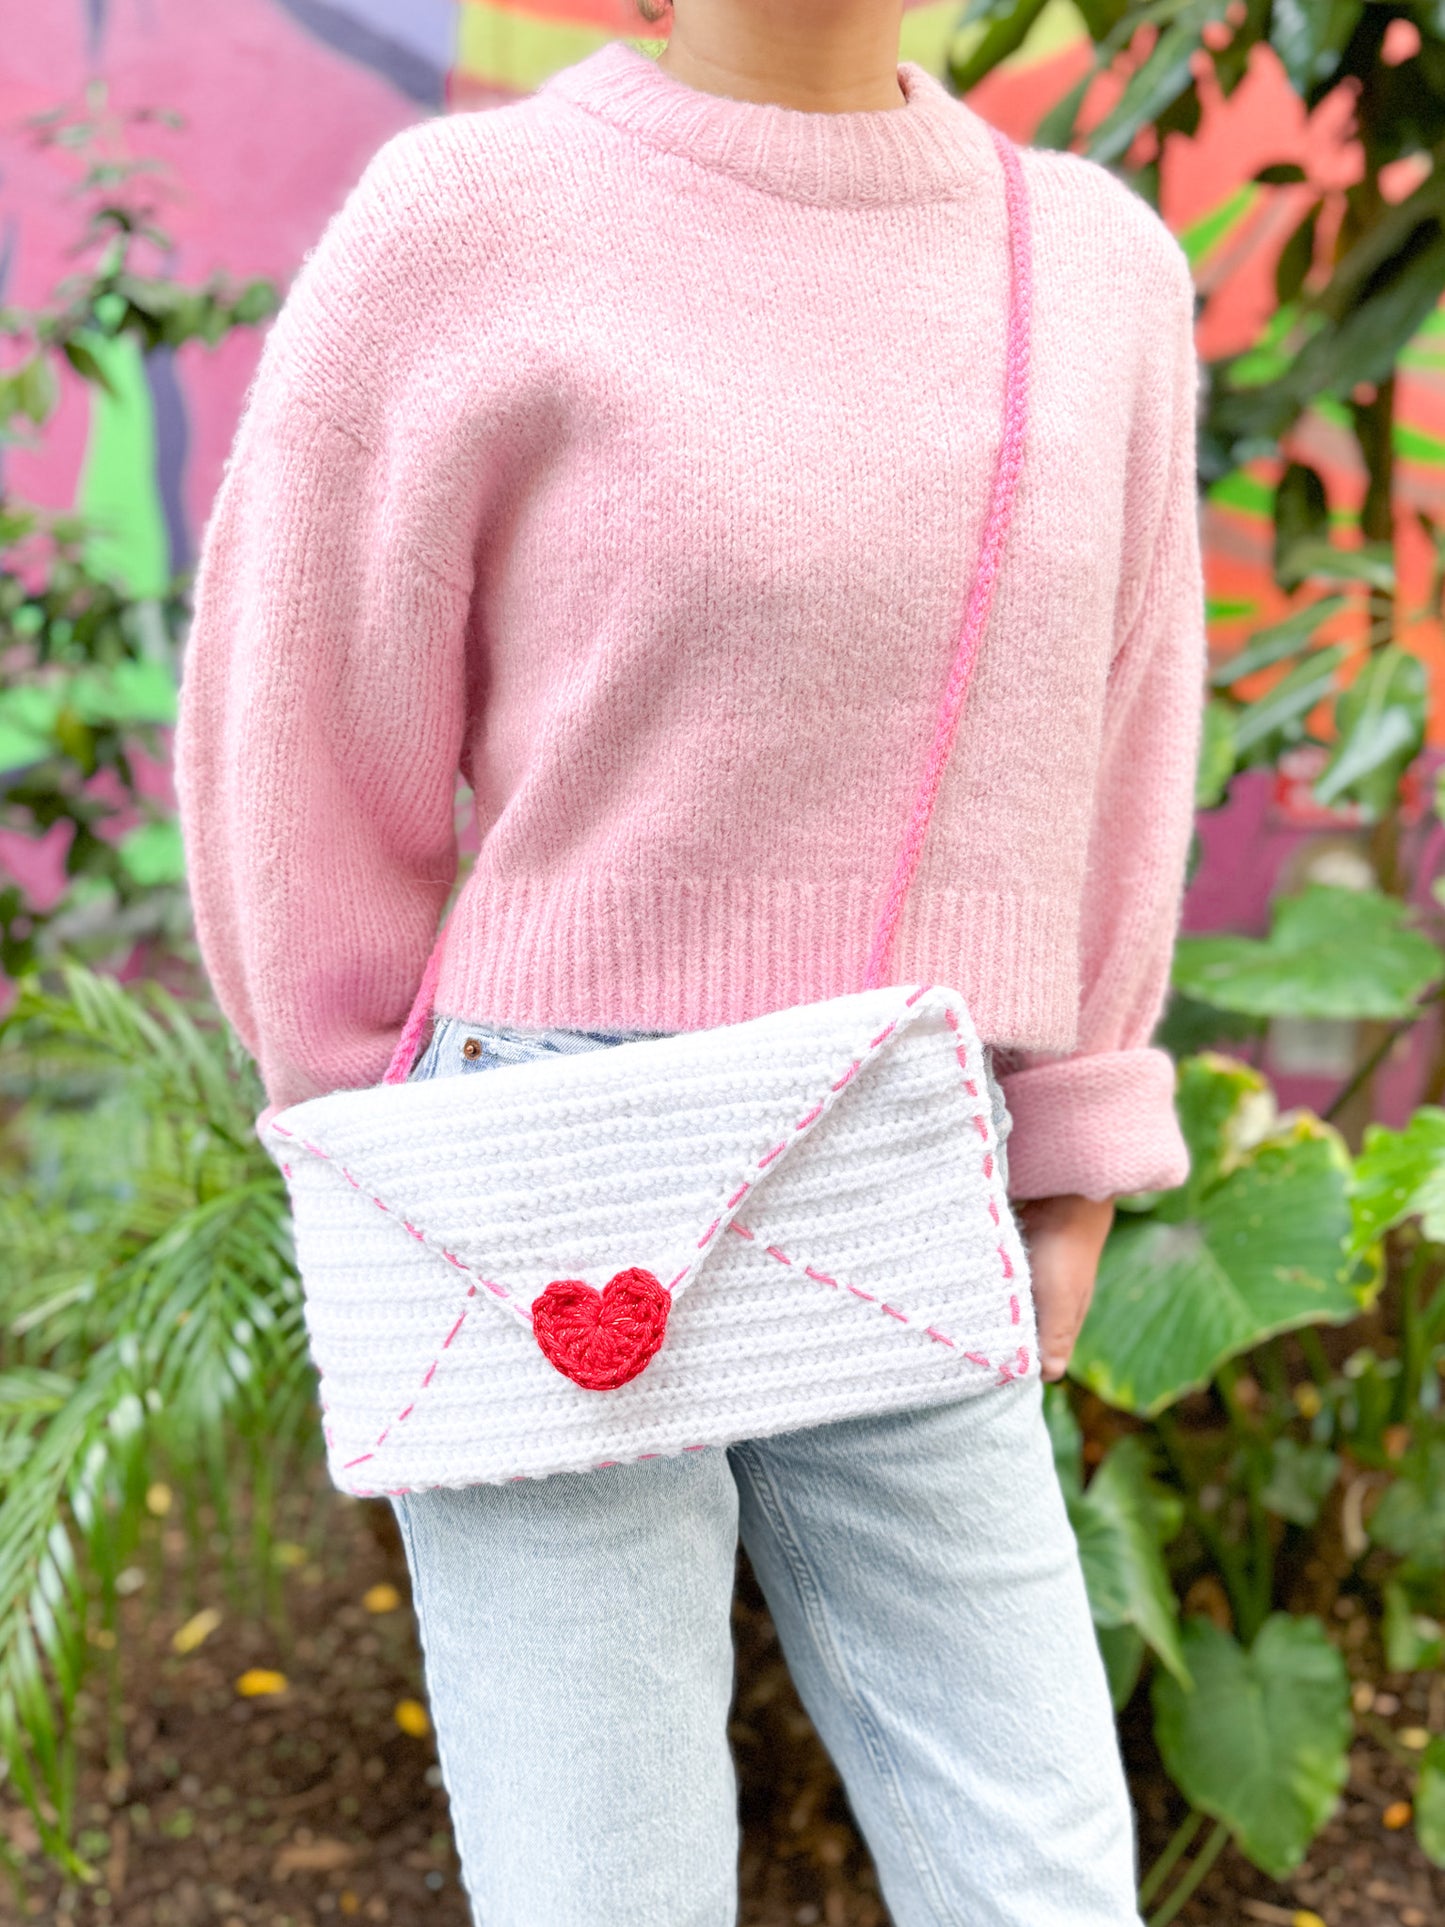 Love Letter Crossbody (Envelope Purse) Crochet Pattern